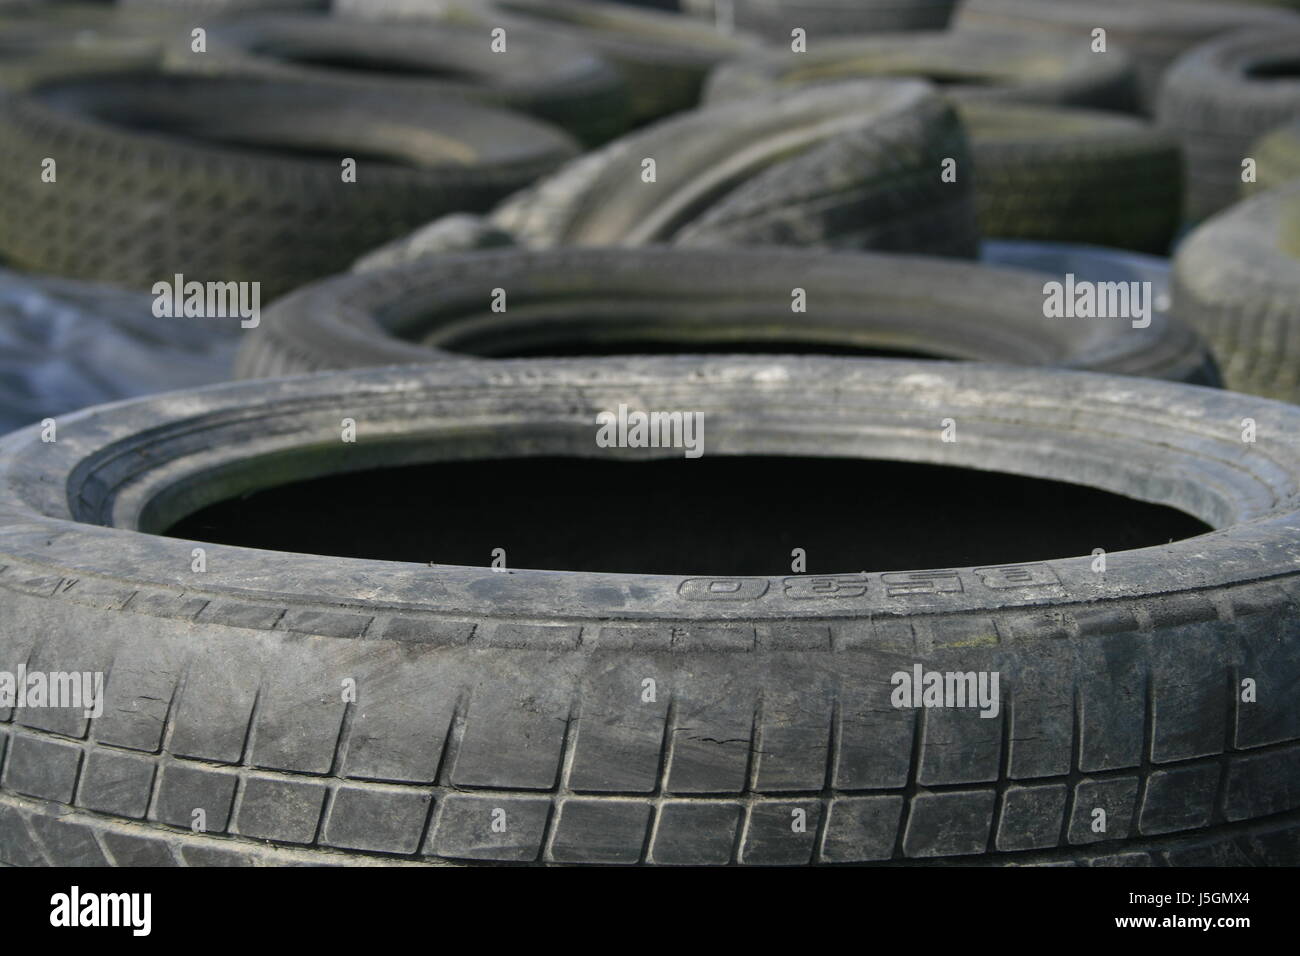 Pneu de voiture pneu pneus pneu silo dommage siloabdeckung fahrzeugreifen pneus Pneus Banque D'Images